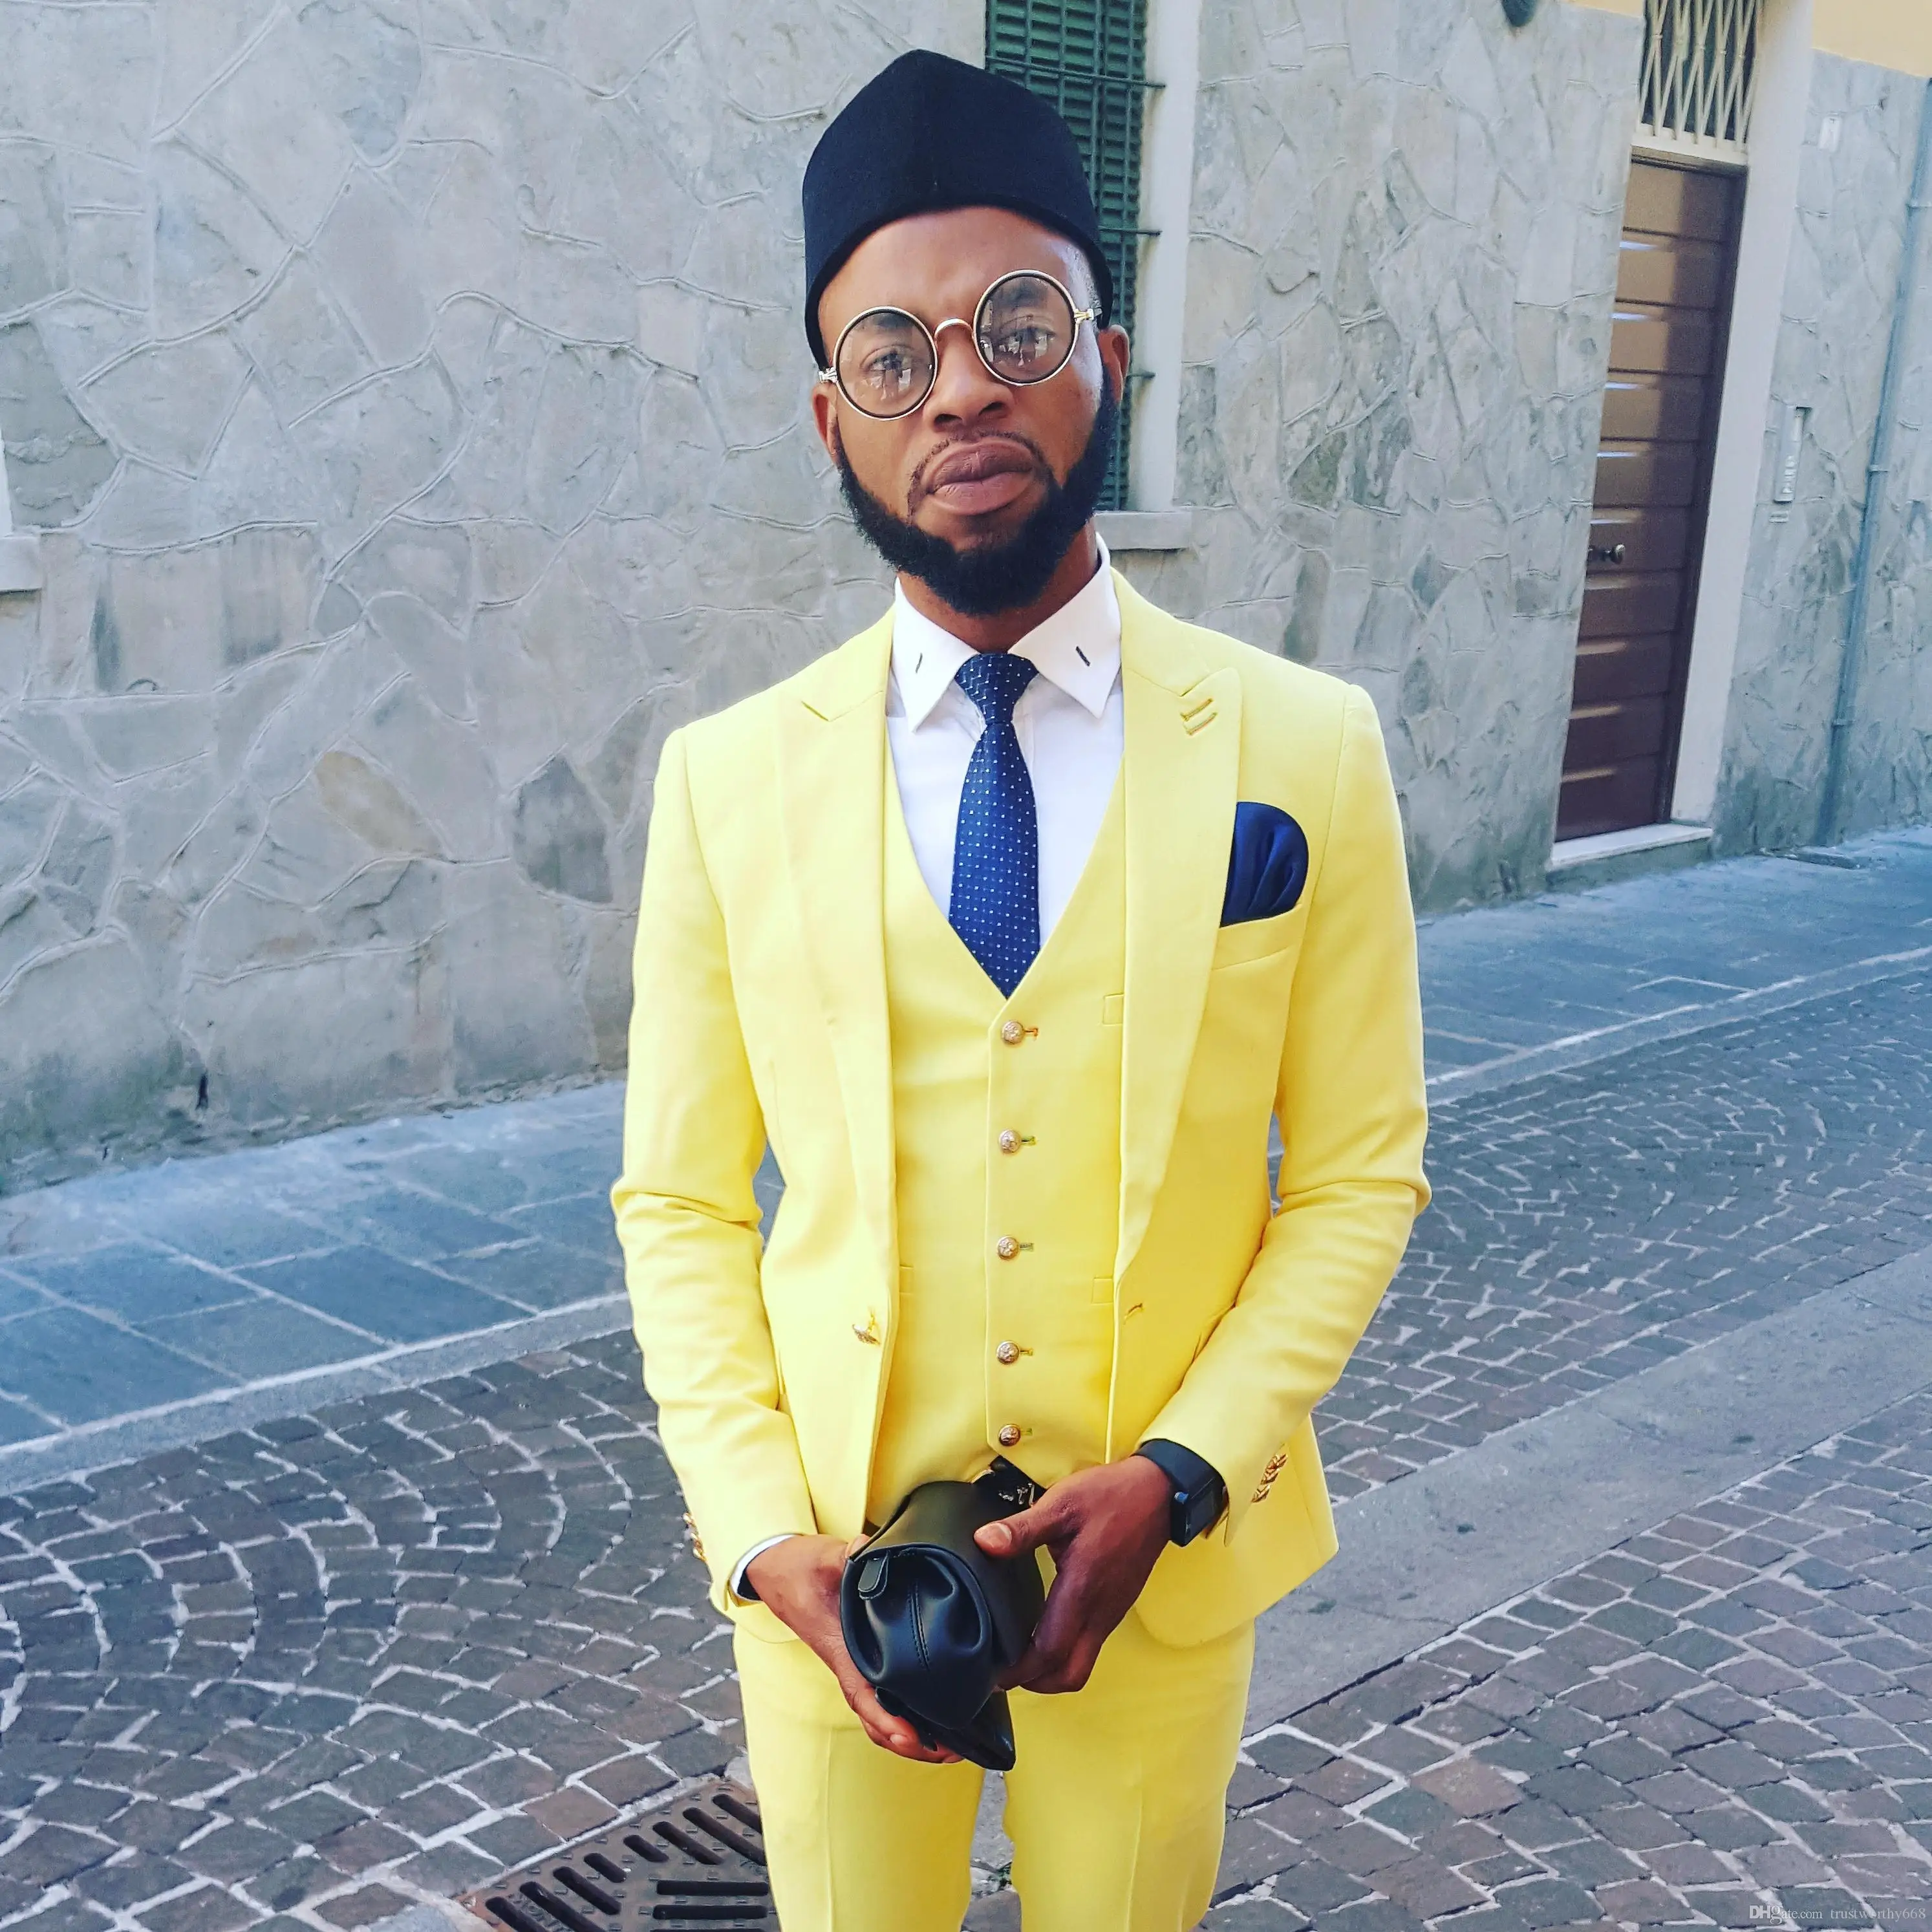 

Lemon Yellow Groomsmen Peak Lapel with ButtonHole Groom Tuxedos Men Suits Wedding/Prom Best Man 3 Pieces ( Jacket+Pants+Vest)